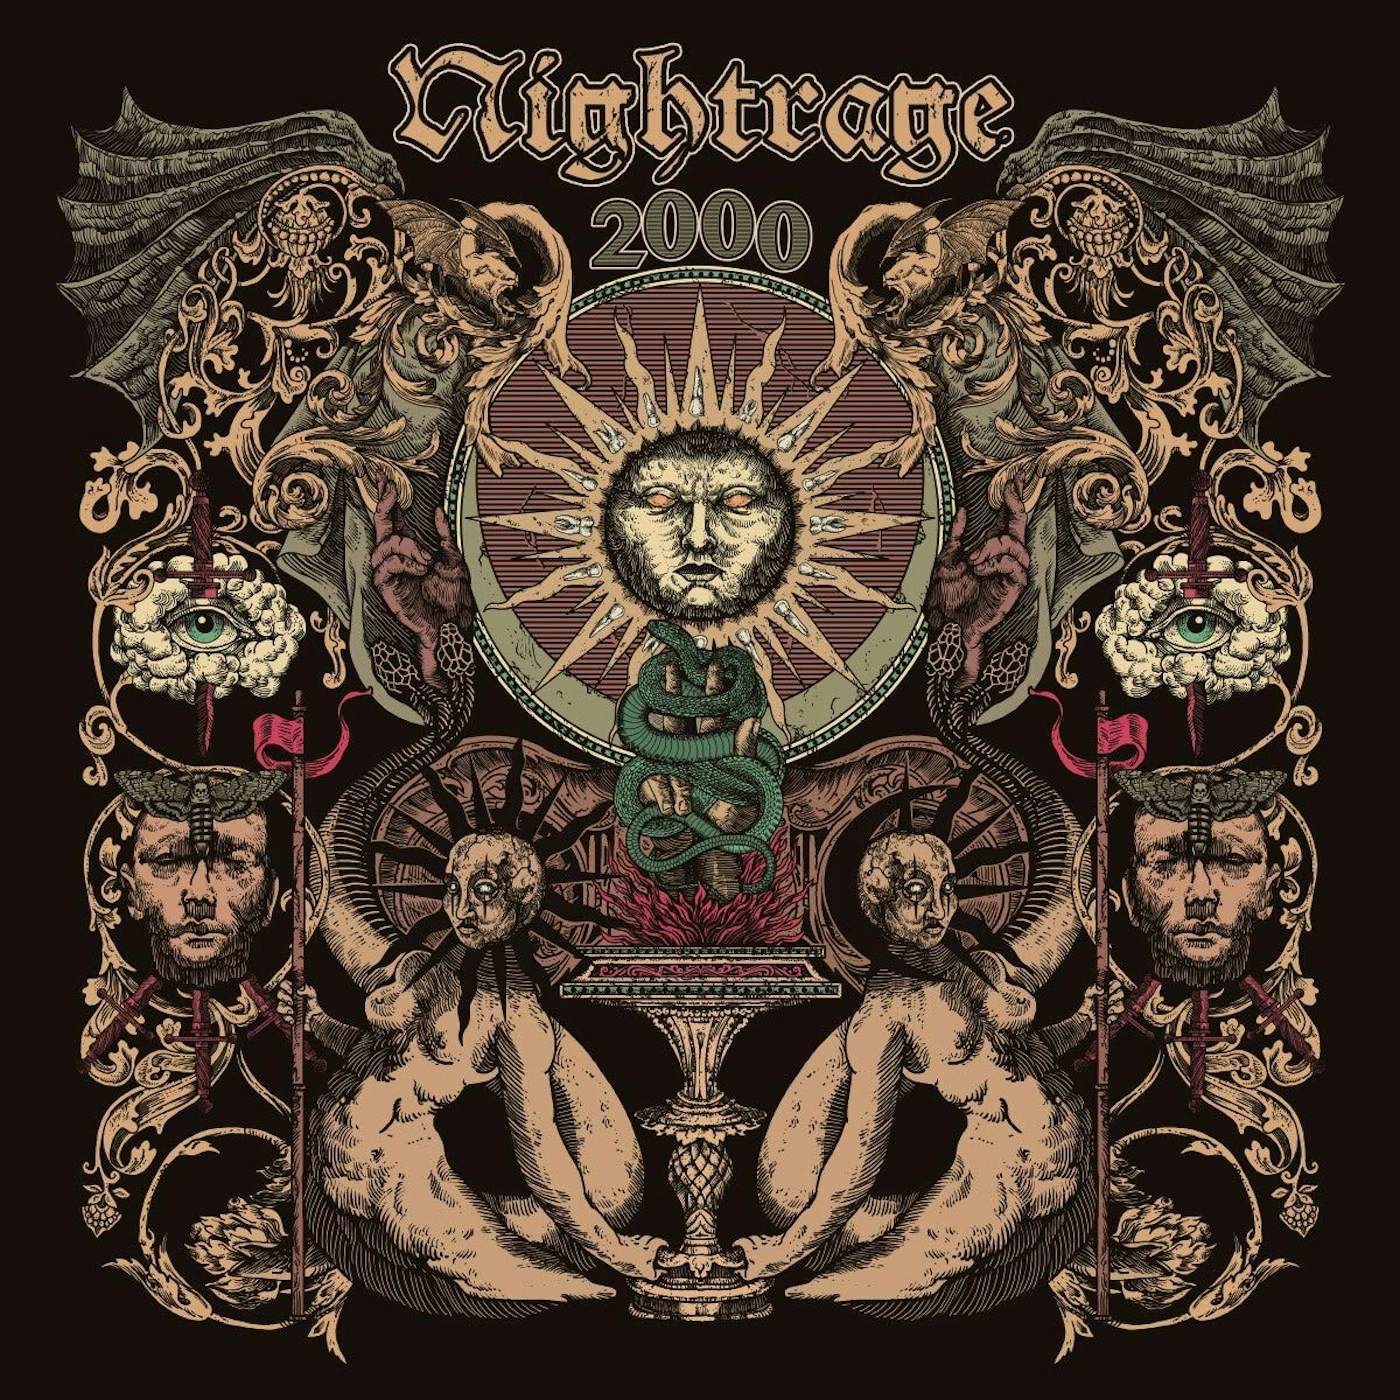 Nightrage Demo 2000 CD